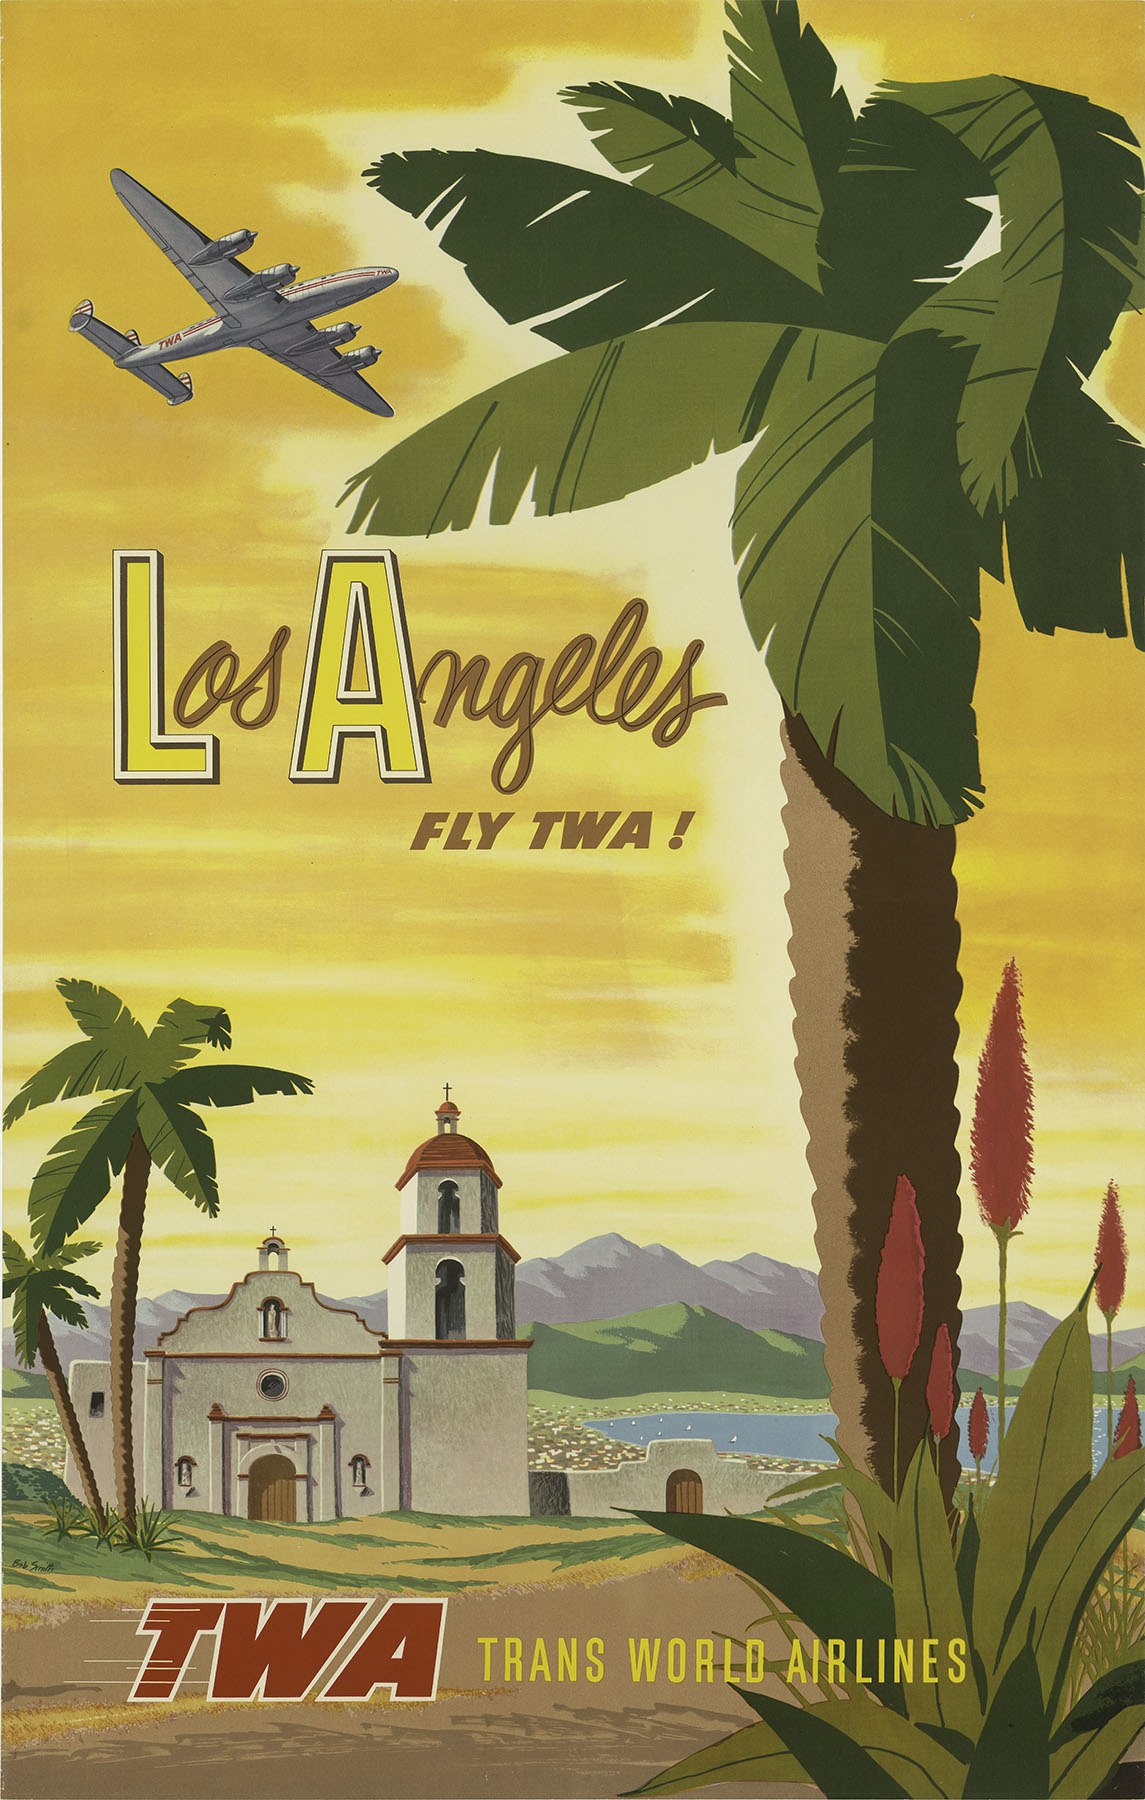 American travel poster